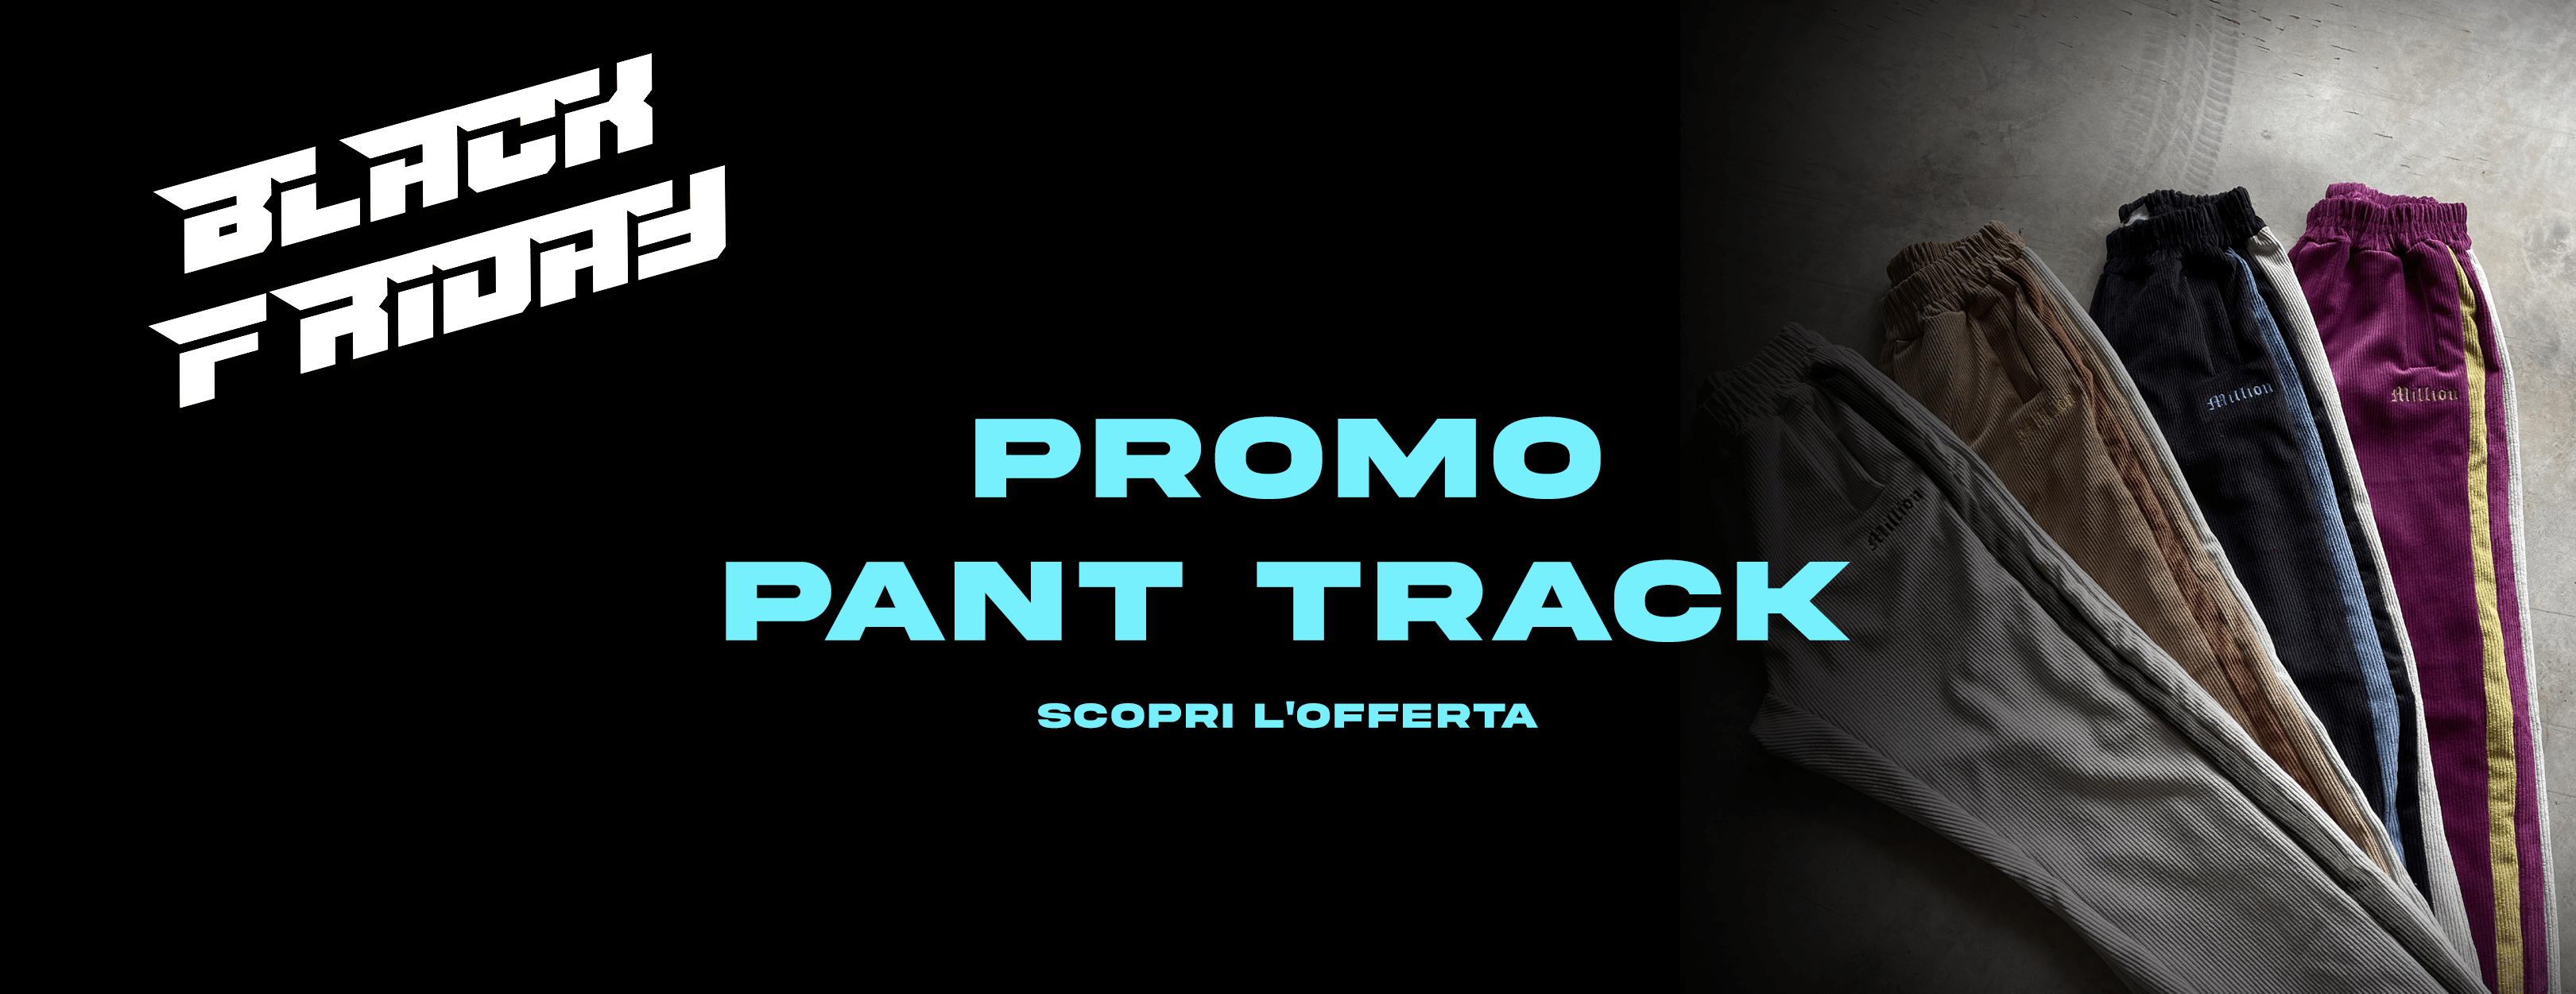 Promo Track Pant